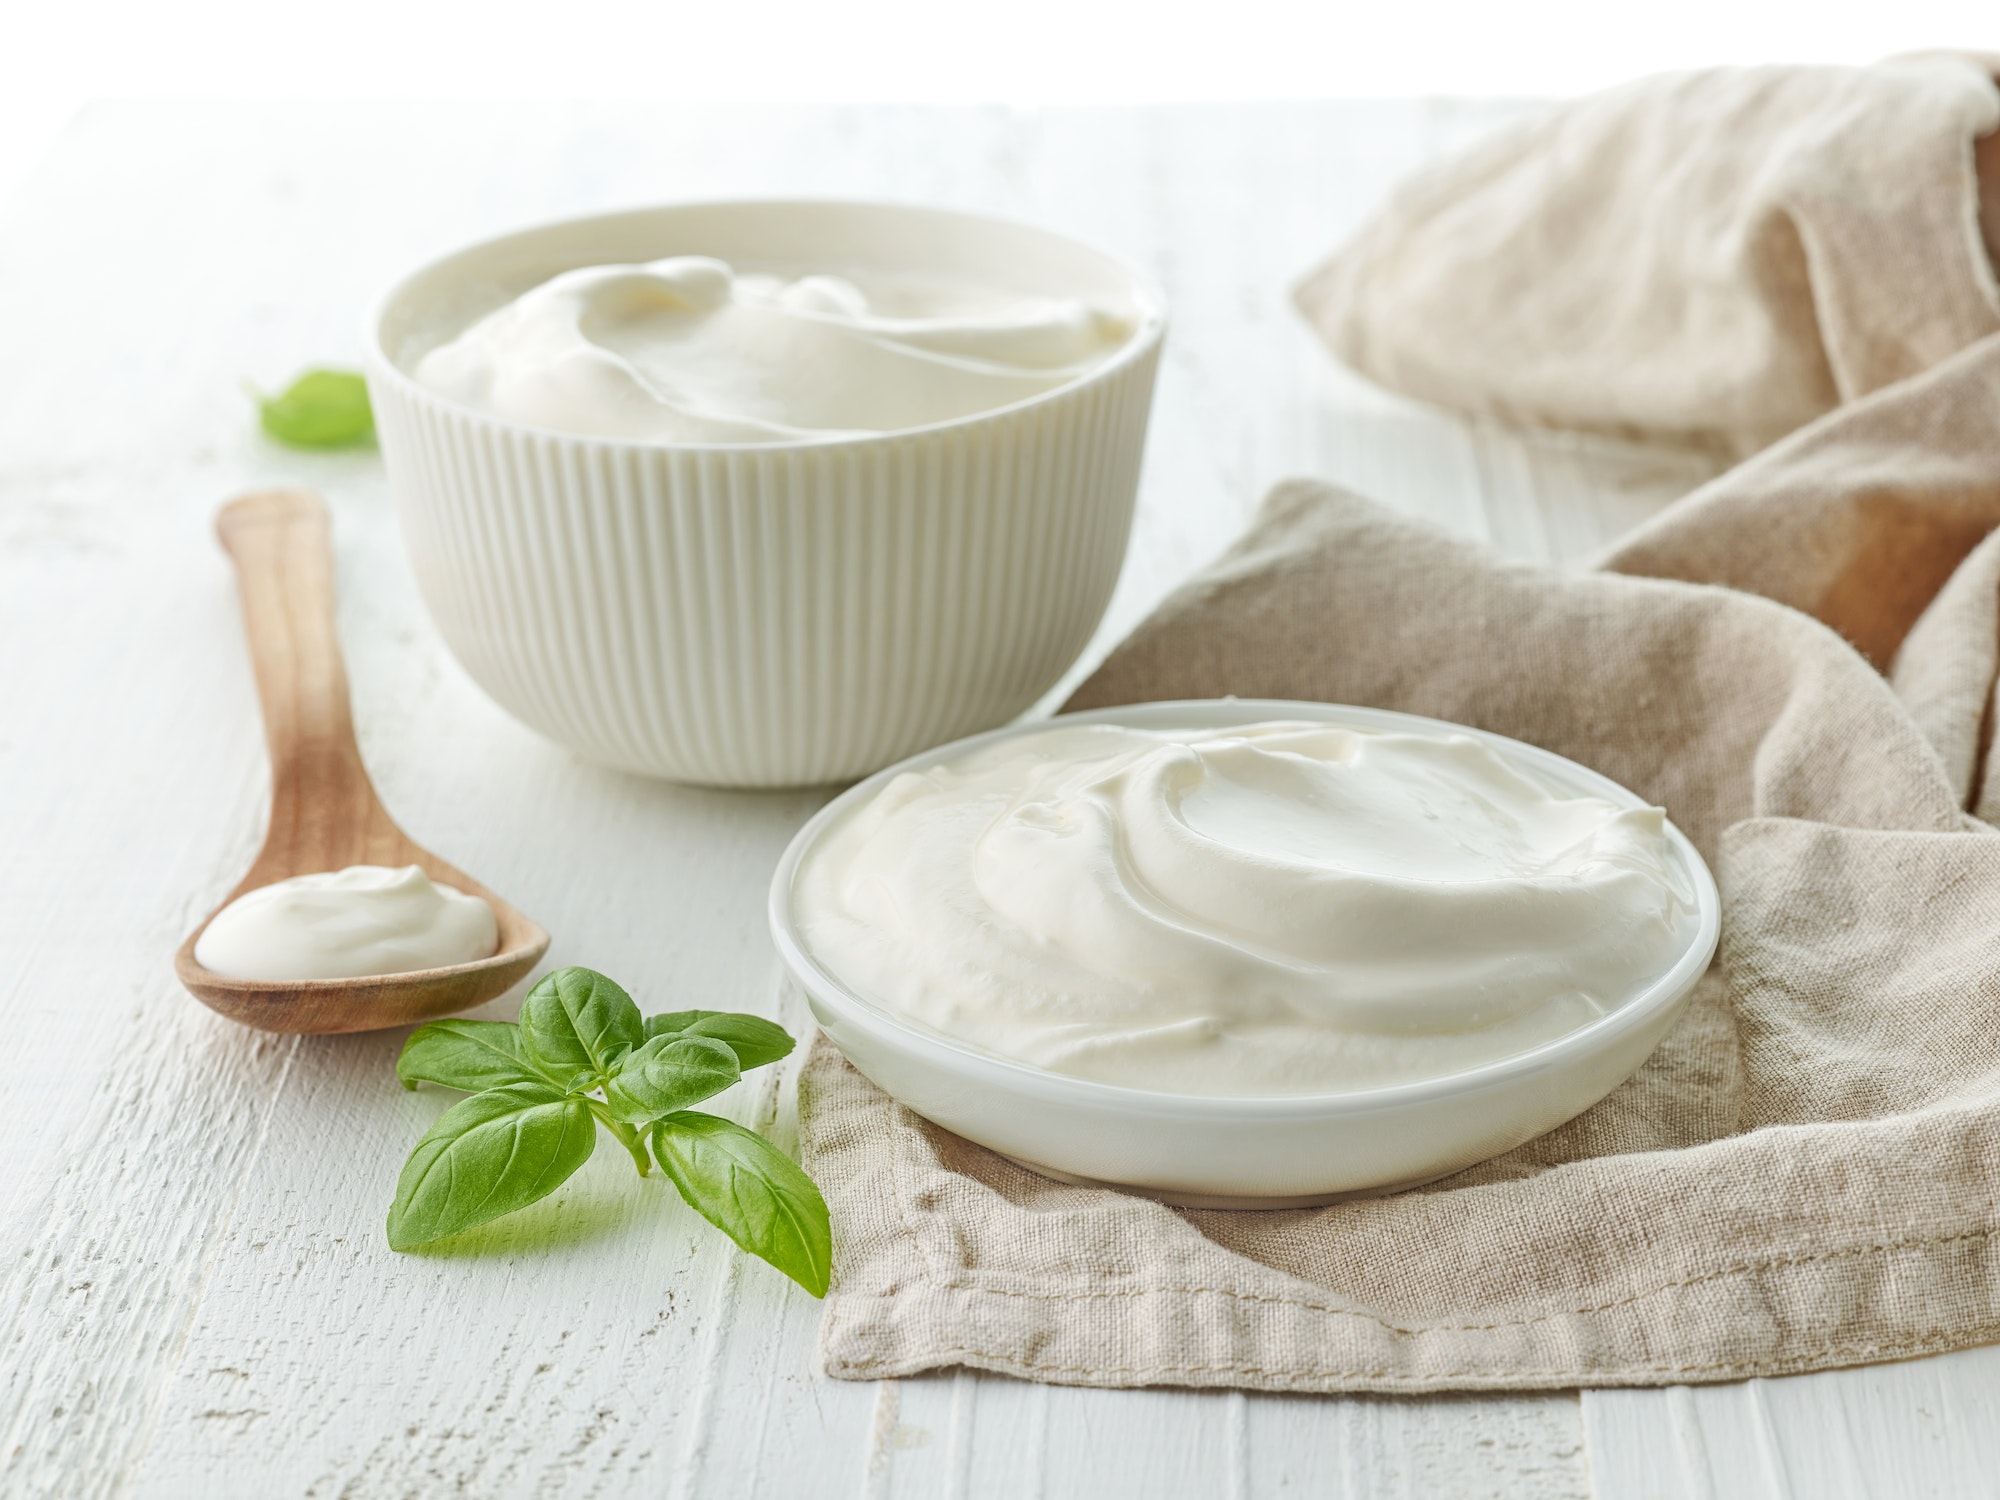 Greek yogurt with starter culture